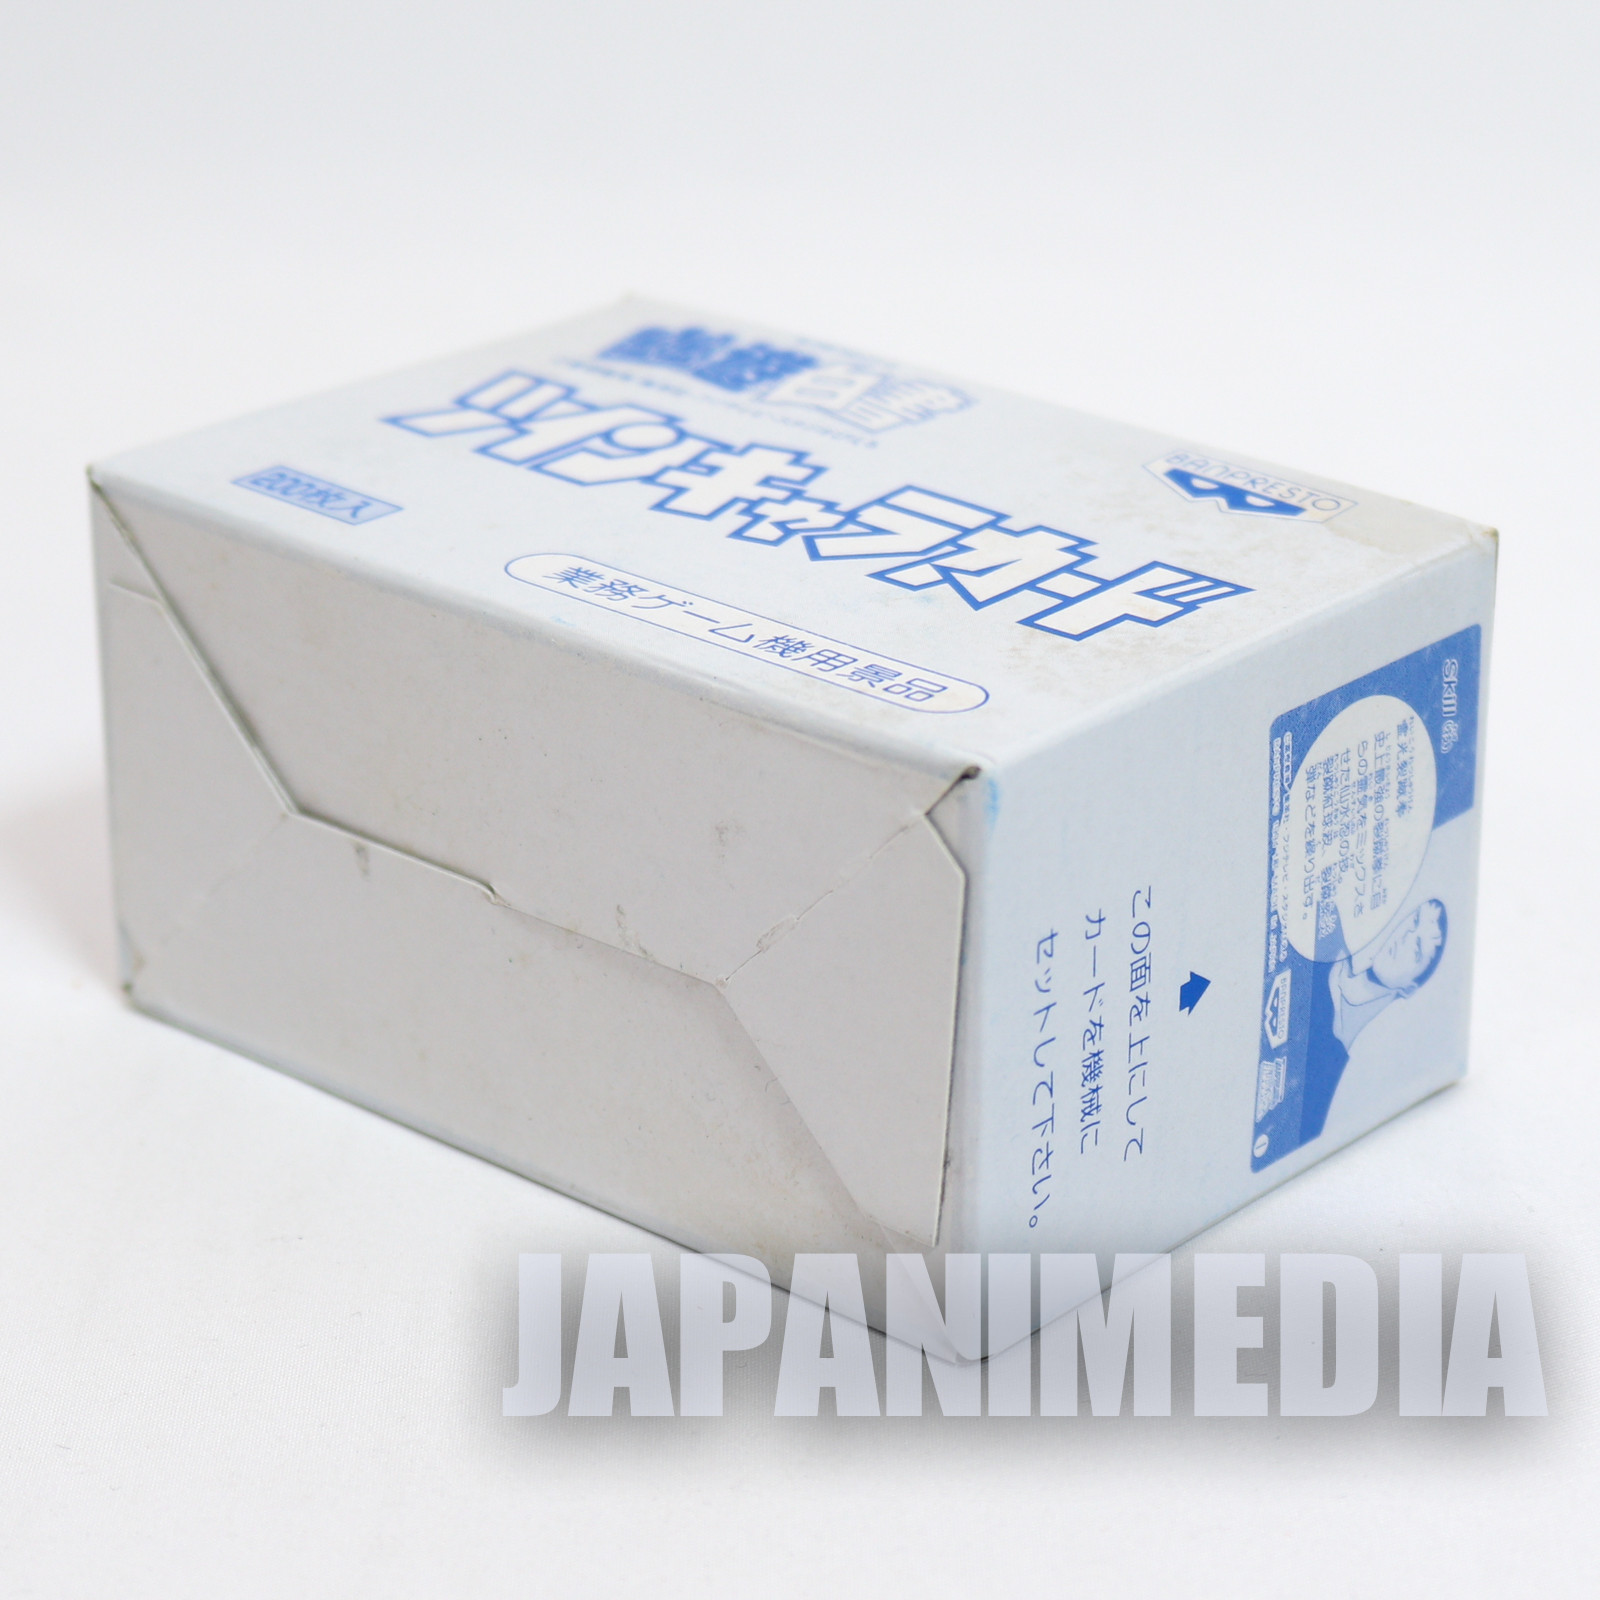 Retro Yu Yu Hakusho Twin Chara Card Box Set 200pc Banpresto JAPAN ANIME